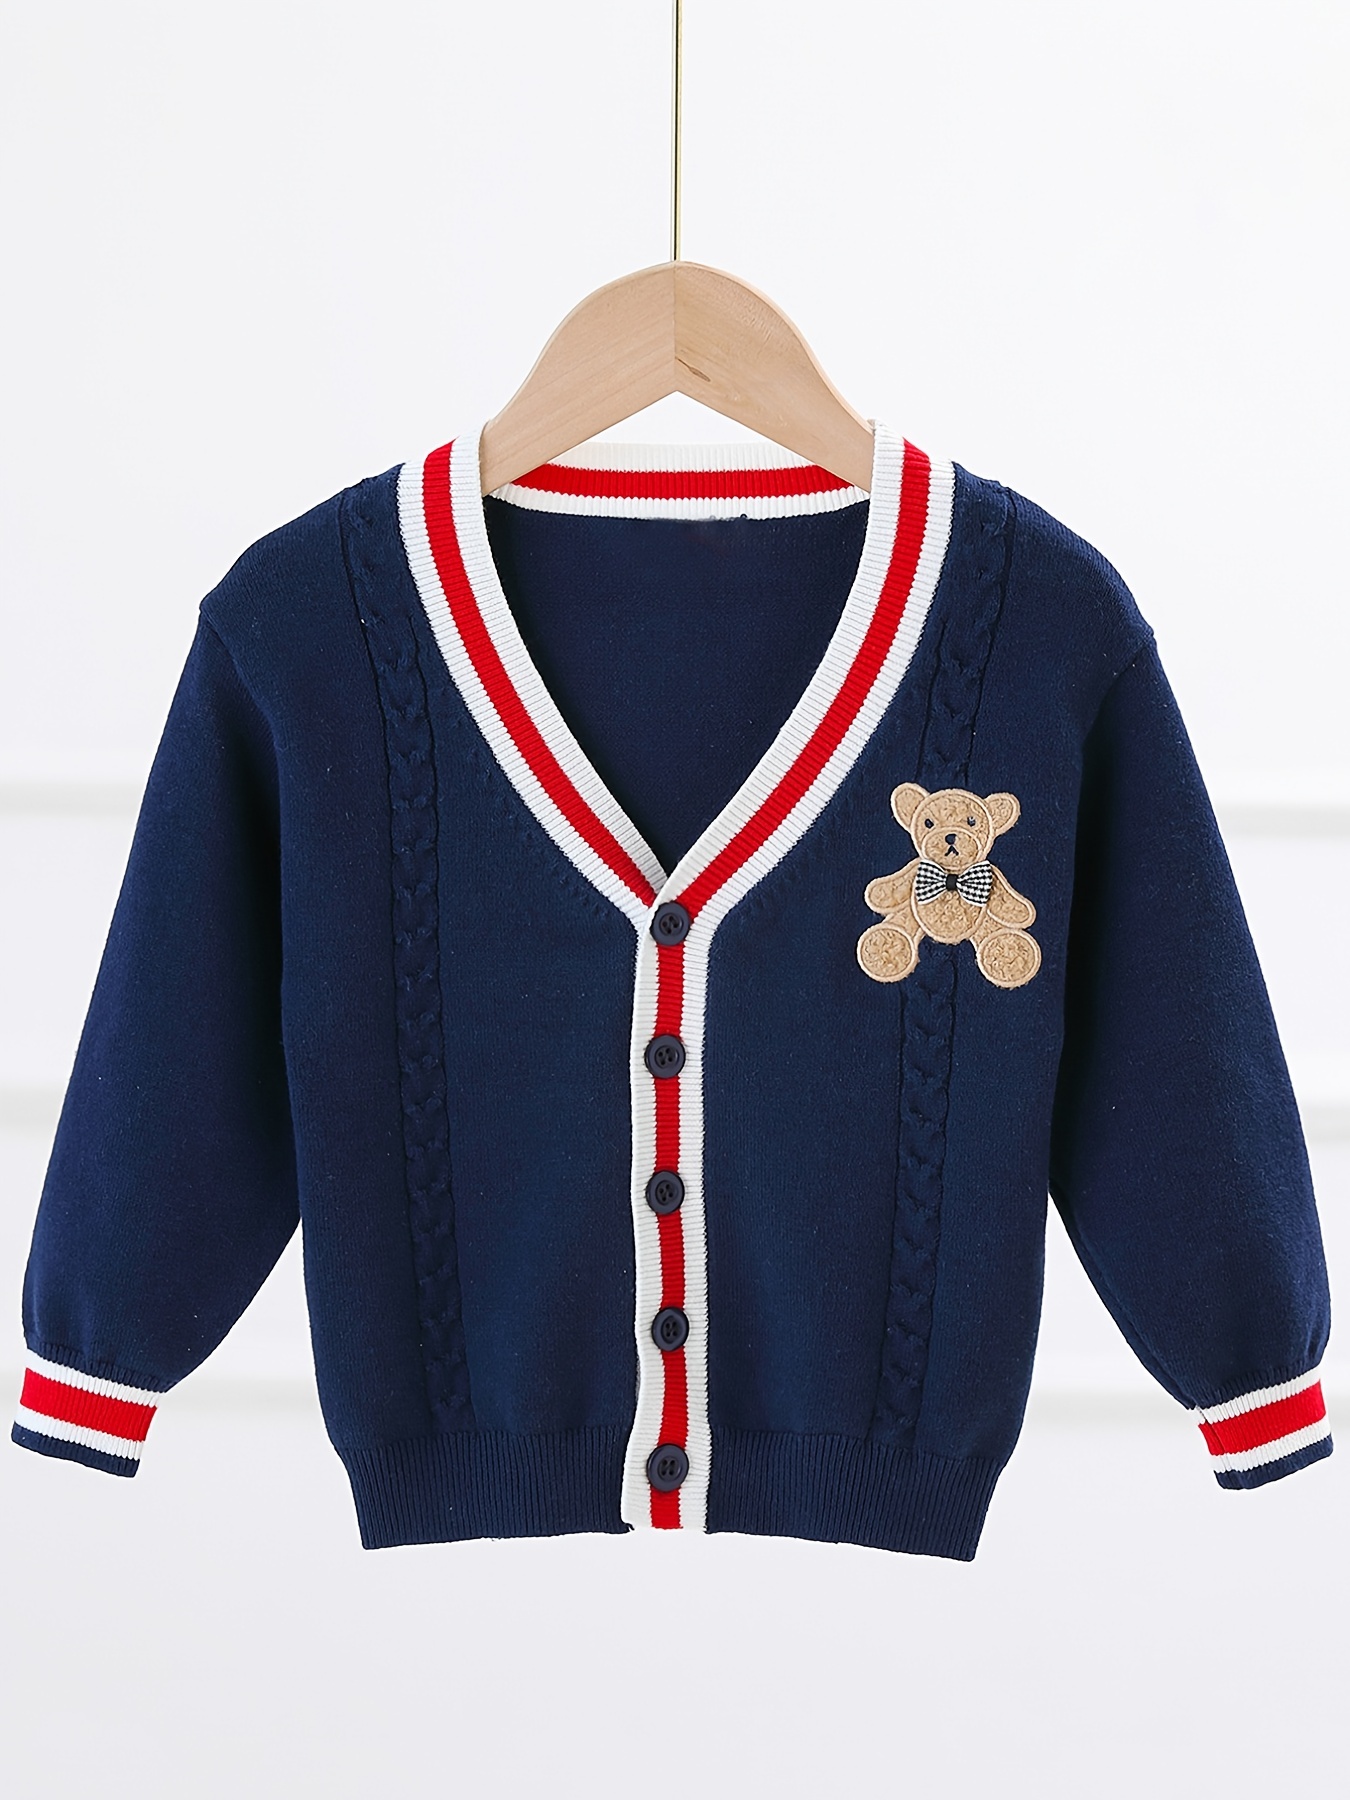 Buy Boys Monogrammed Blue Sweater Blue Sweater for Boys Boys